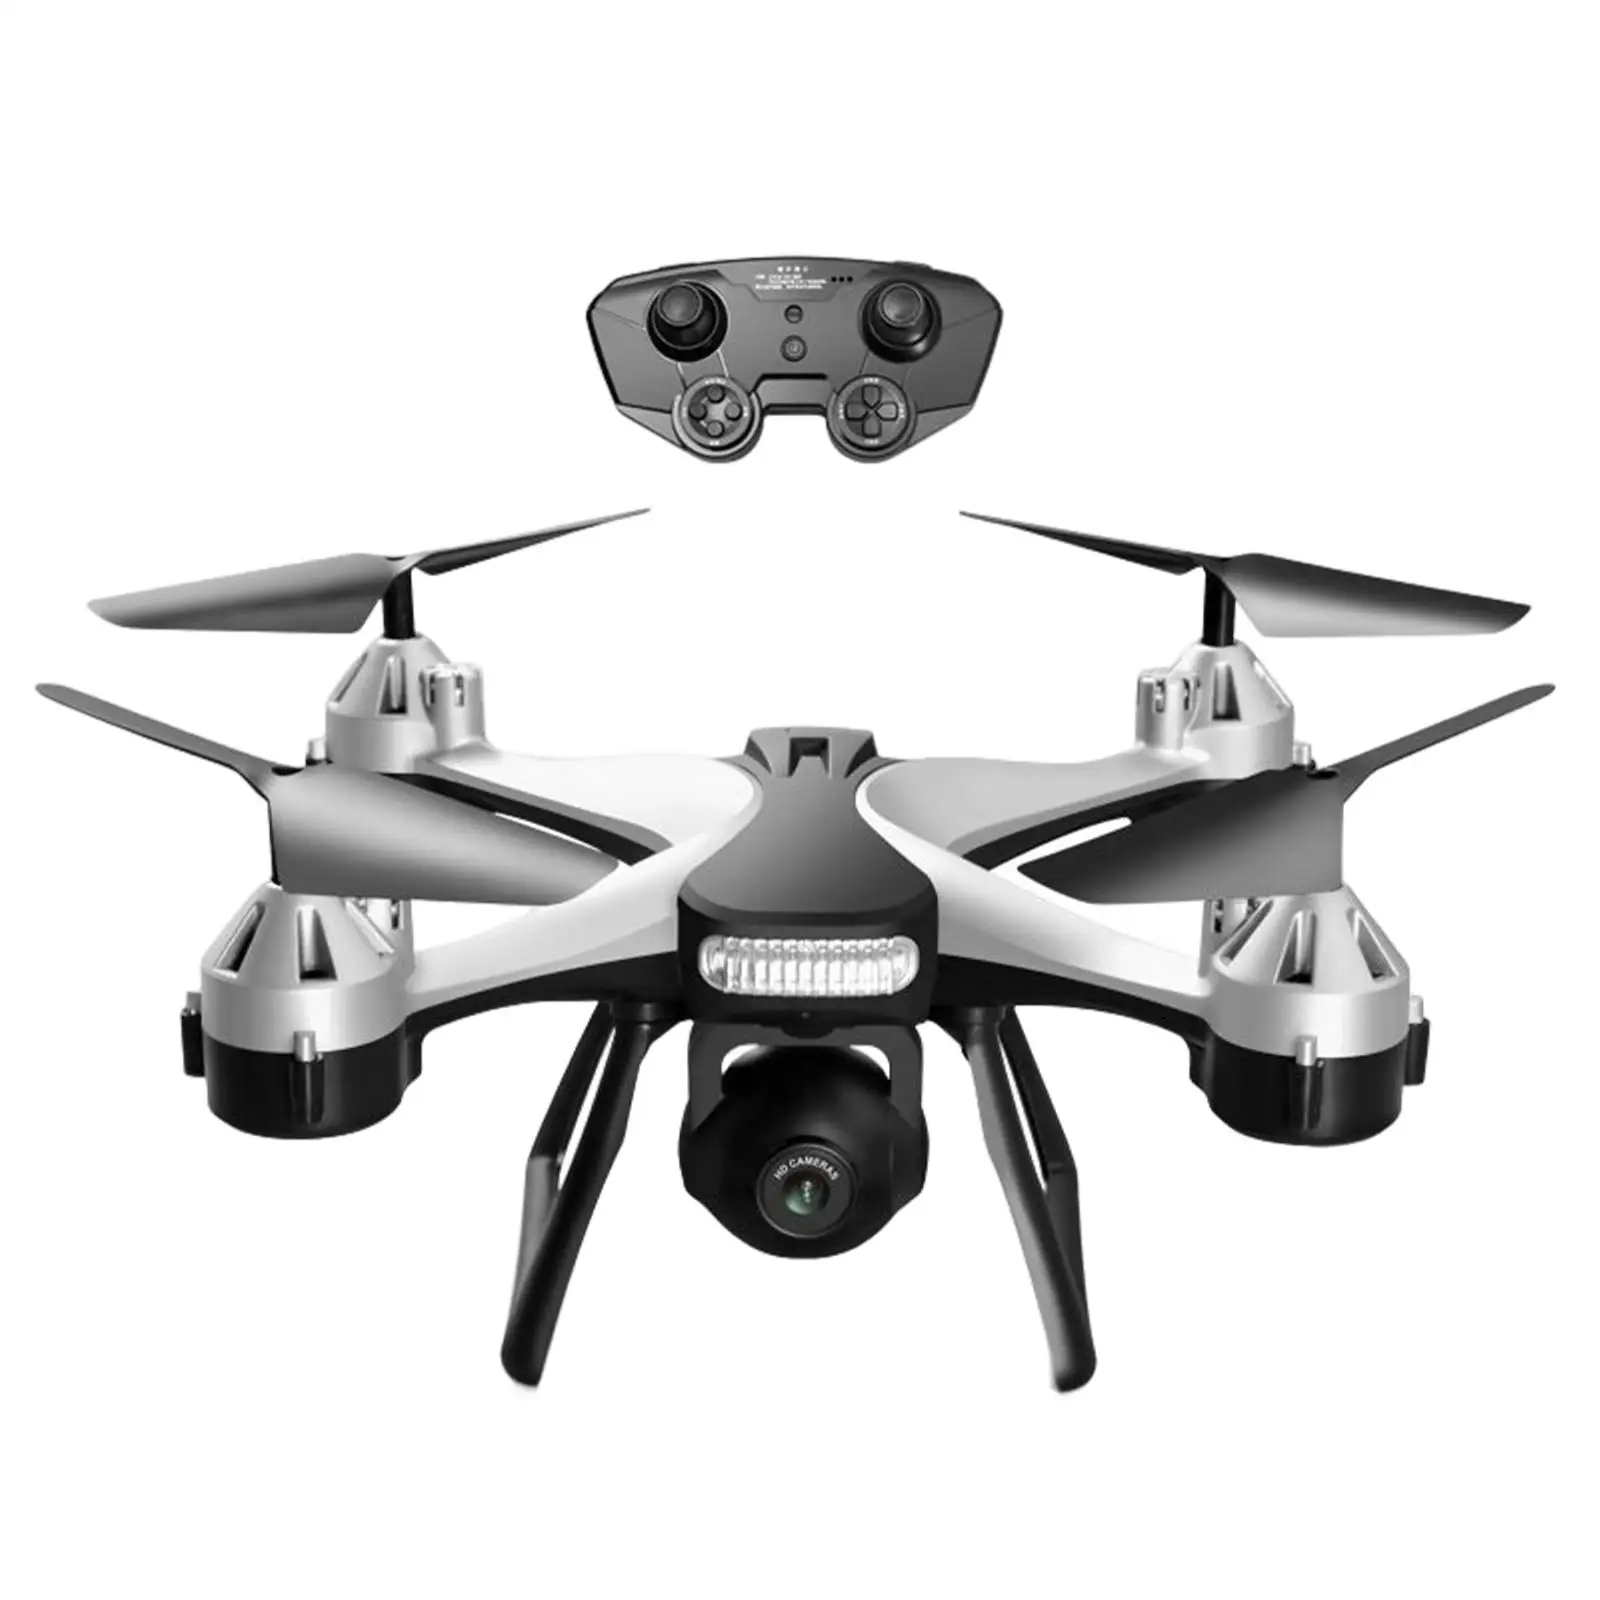 4K Camera Drone Quadcopter Remote Control Aerodynamic Streamline Design Phone Control Flying Hovering System LED Night Light